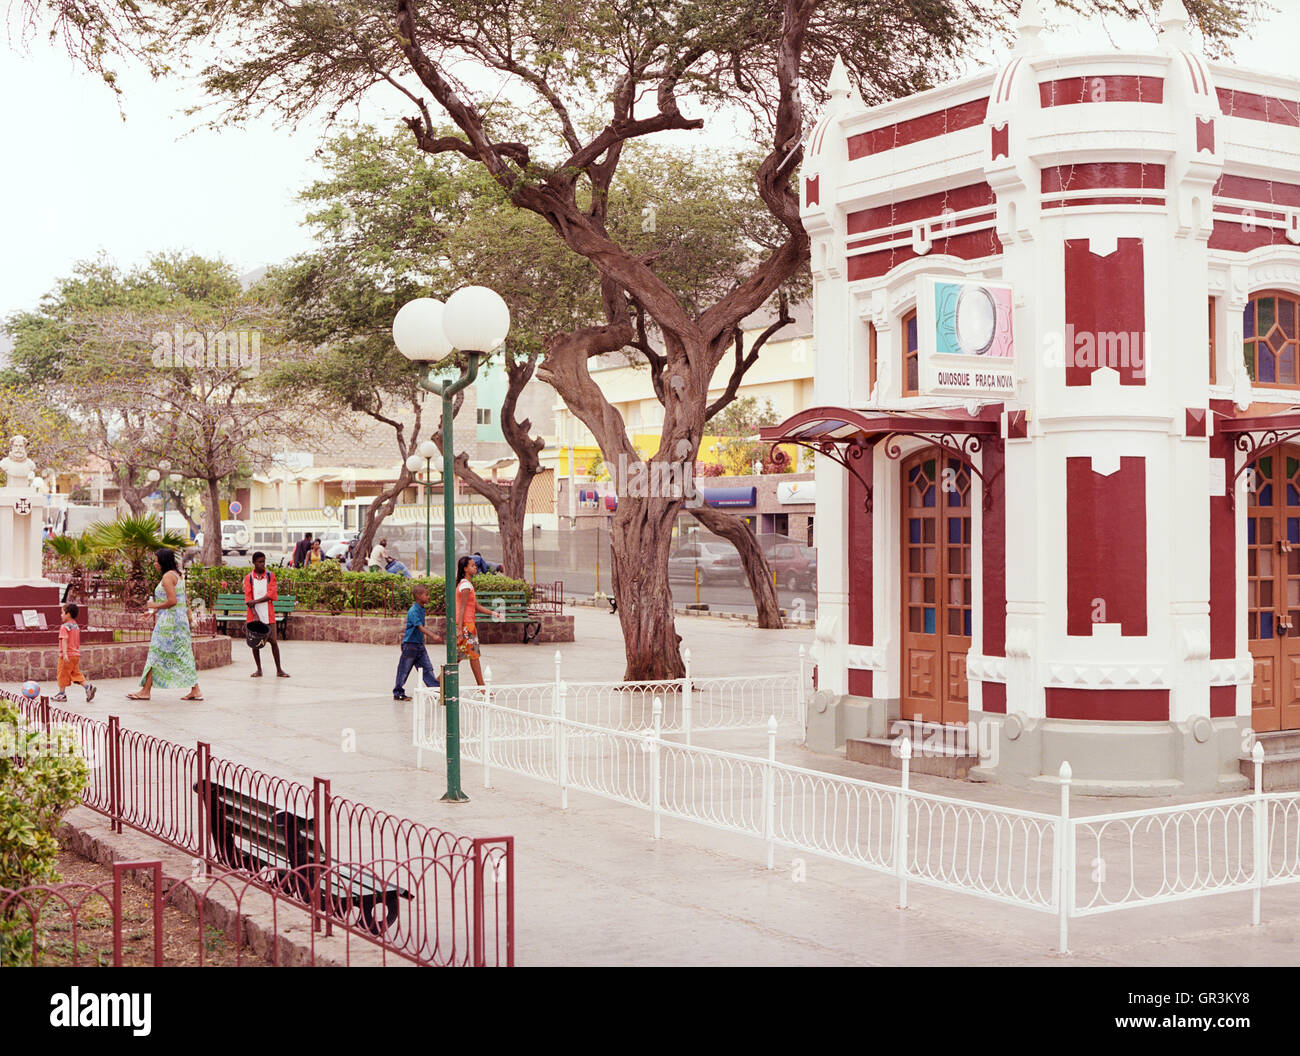 Praca Amilcar Cabral Square. Mindelo, Sao Vincente. Cape Verde Islands, Africa. Stock Photo